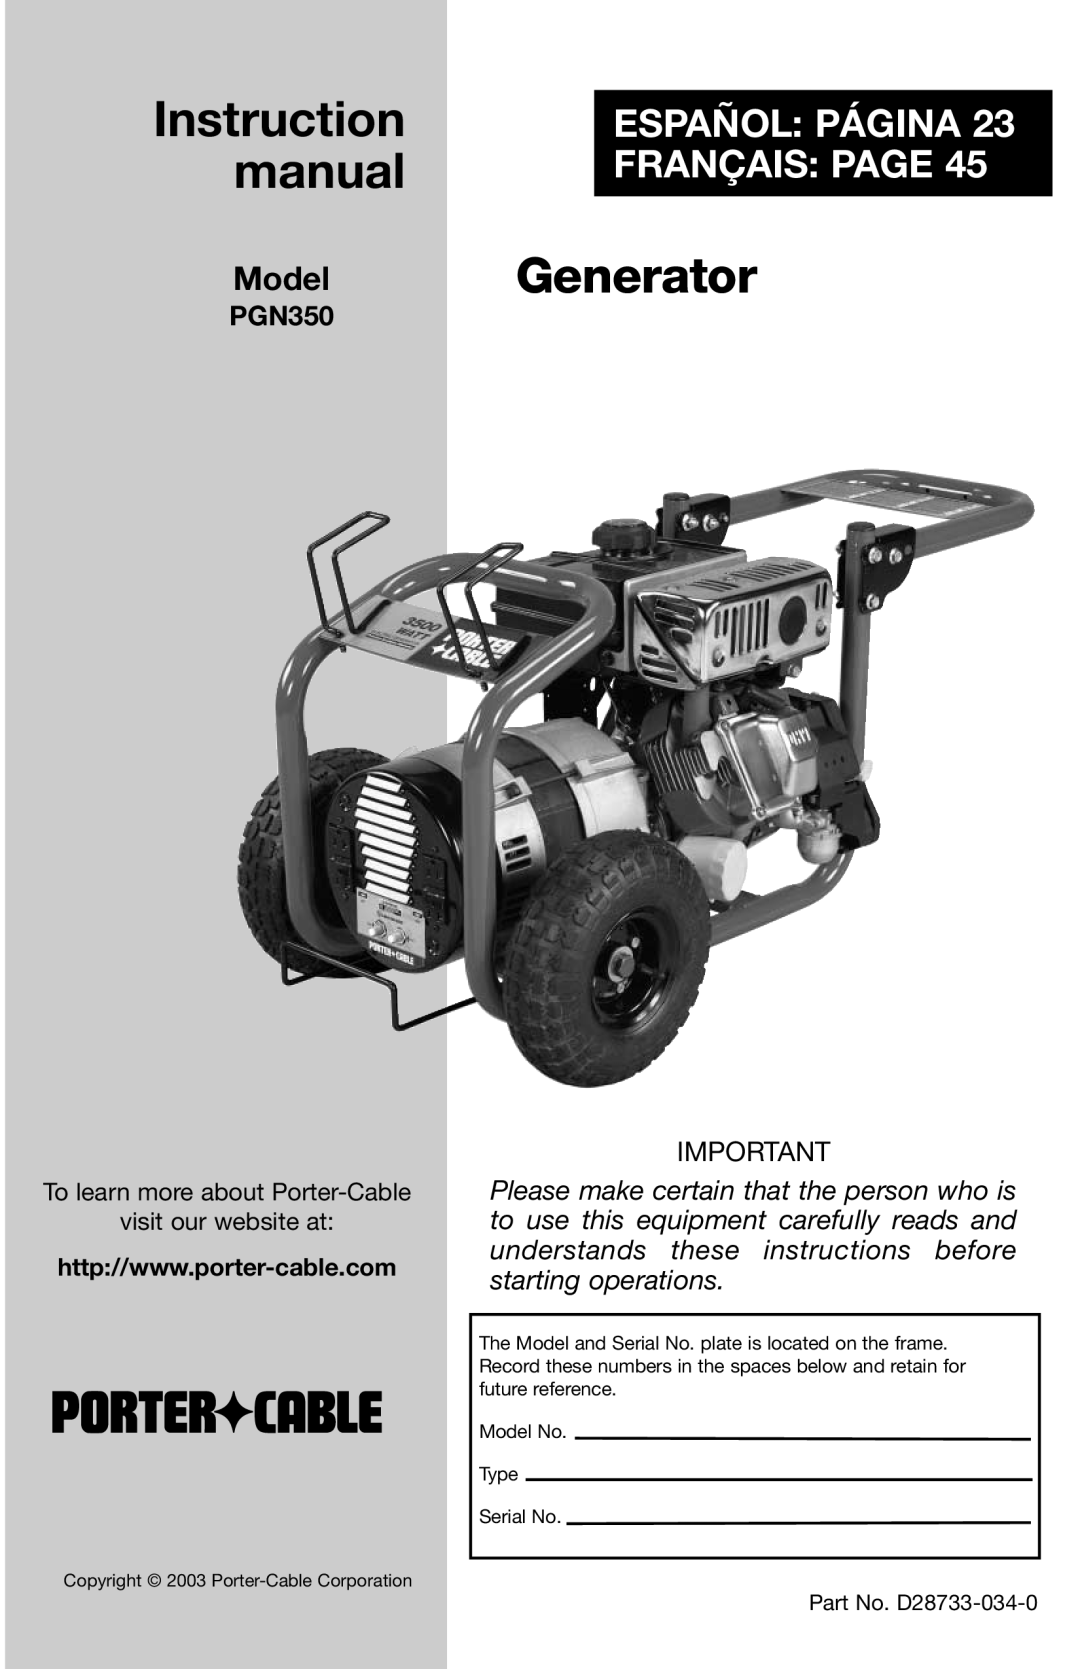 Porter-Cable D28733-034-0 instruction manual Español Página Français Page, Model, PGN350, Instruction manual, Generator 